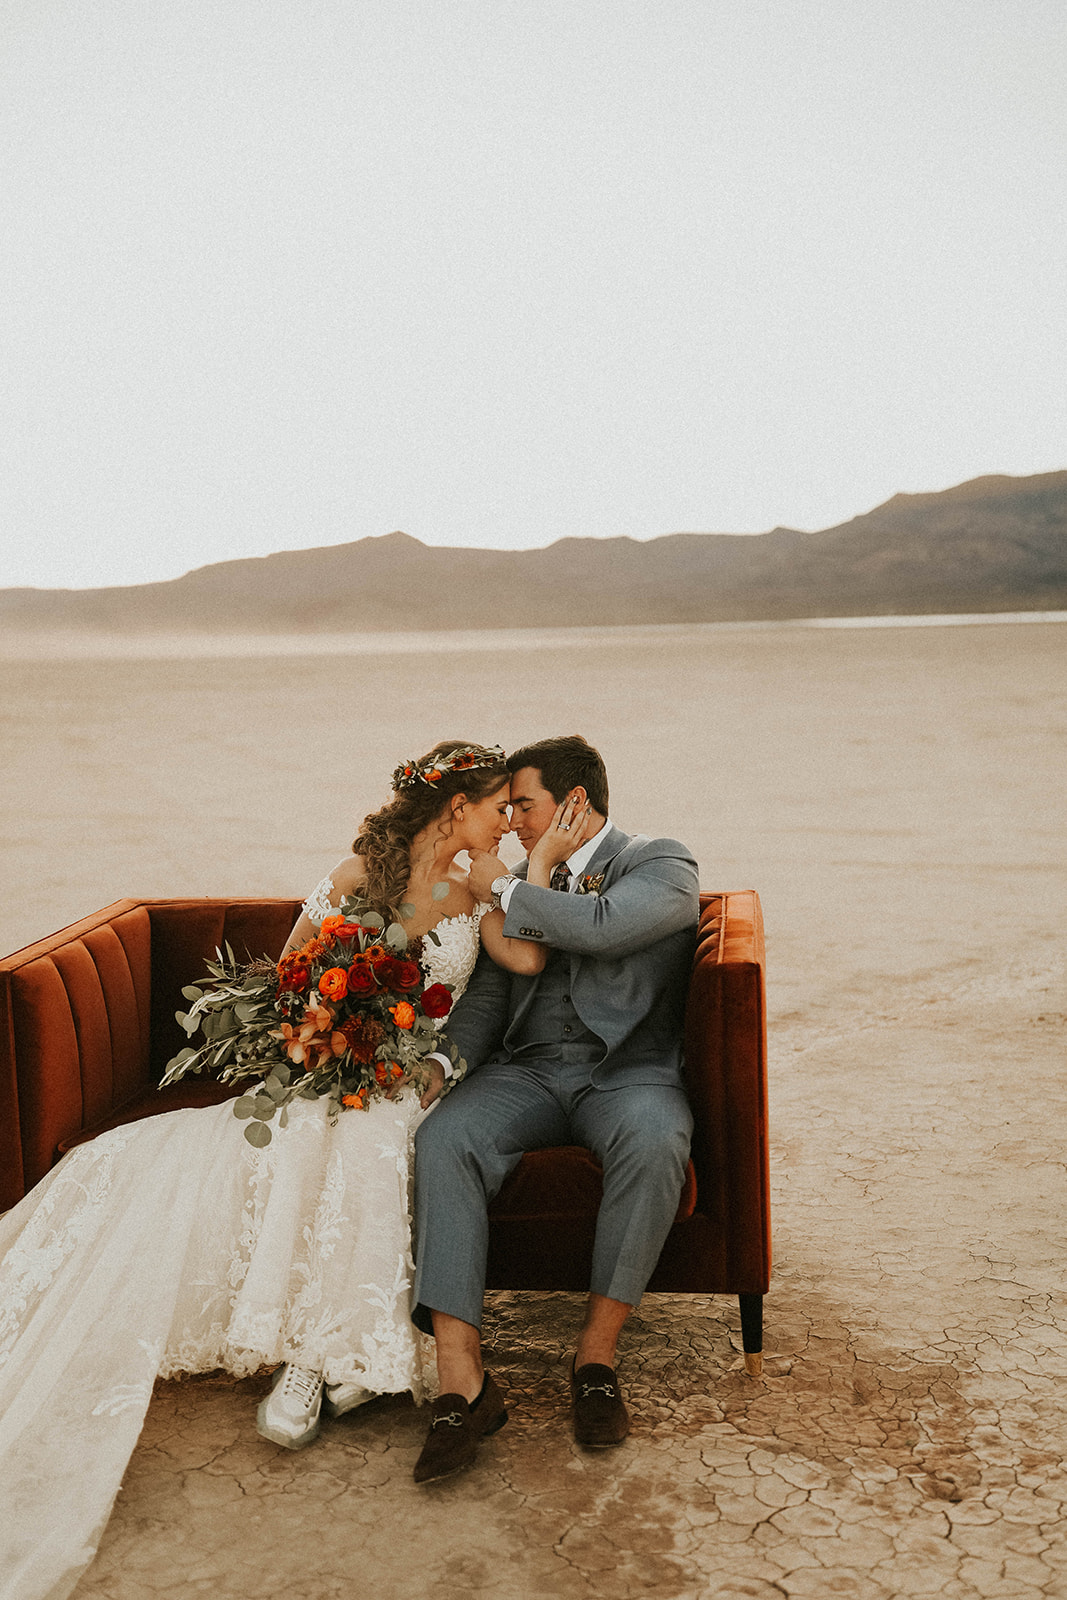 Newlyweds having a moment on Terra-cotta Velvet Couch in Desert as Wedding Photo Prop 